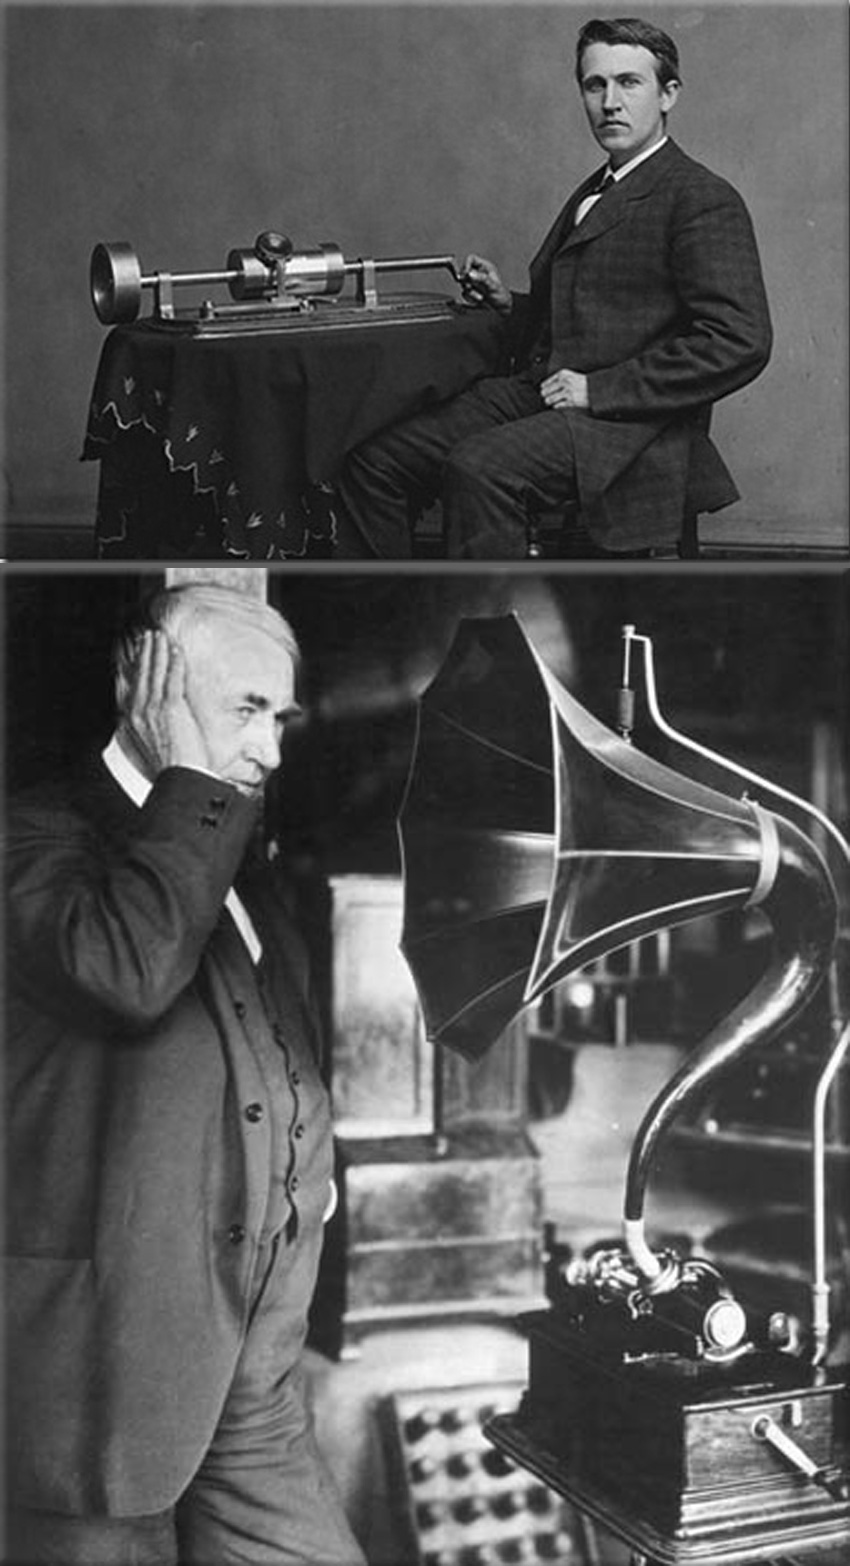 Thomas Edison patents the phonograph